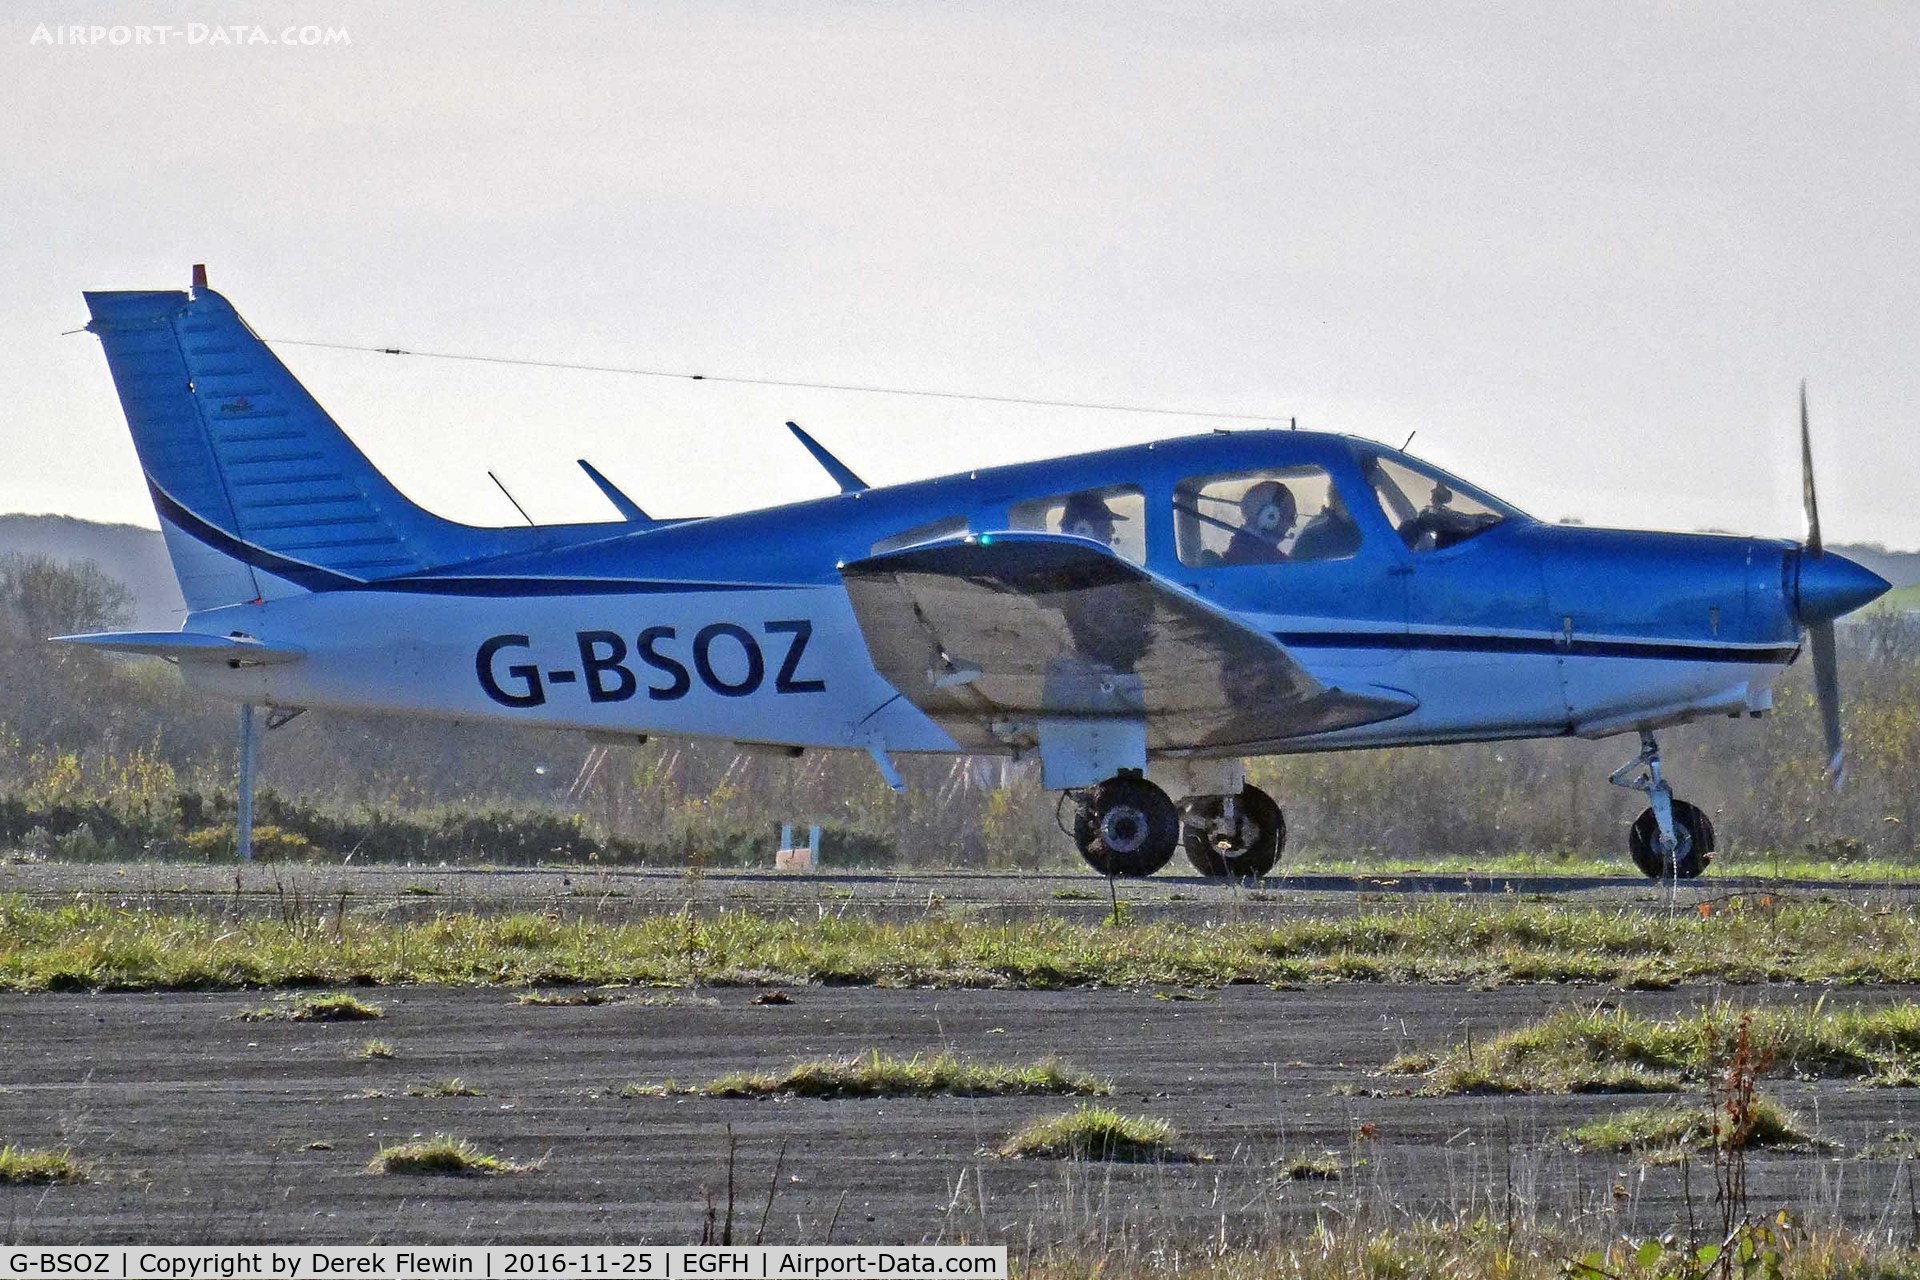 G-BSOZ, 1979 Piper PA-28-161 Cherokee Warrior II C/N 28-7916080, Cherokee Warrior II, Shobdon Herefordshire based, previously N30220, seen doing power check prior to departing runway 04 RTB